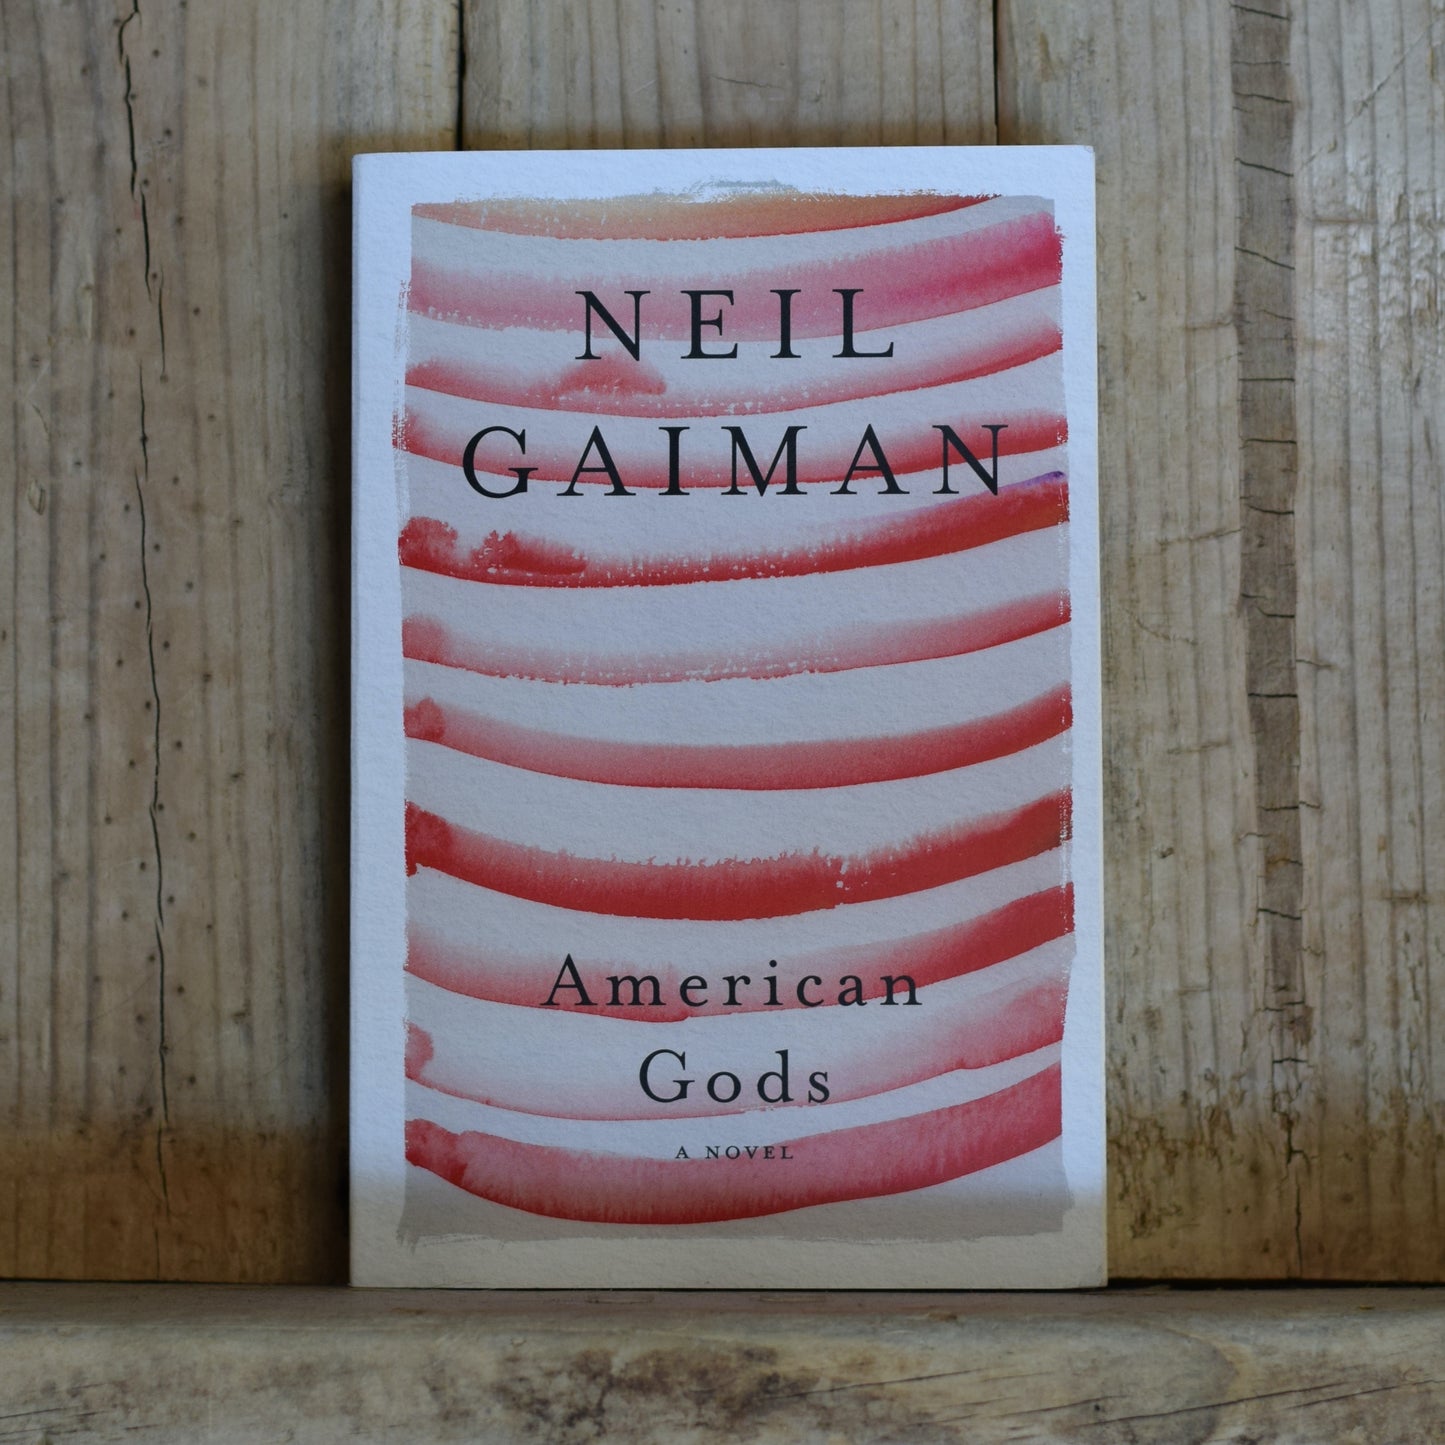 Fantasy Paperback: Neil Gaiman - American Gods SIGNED